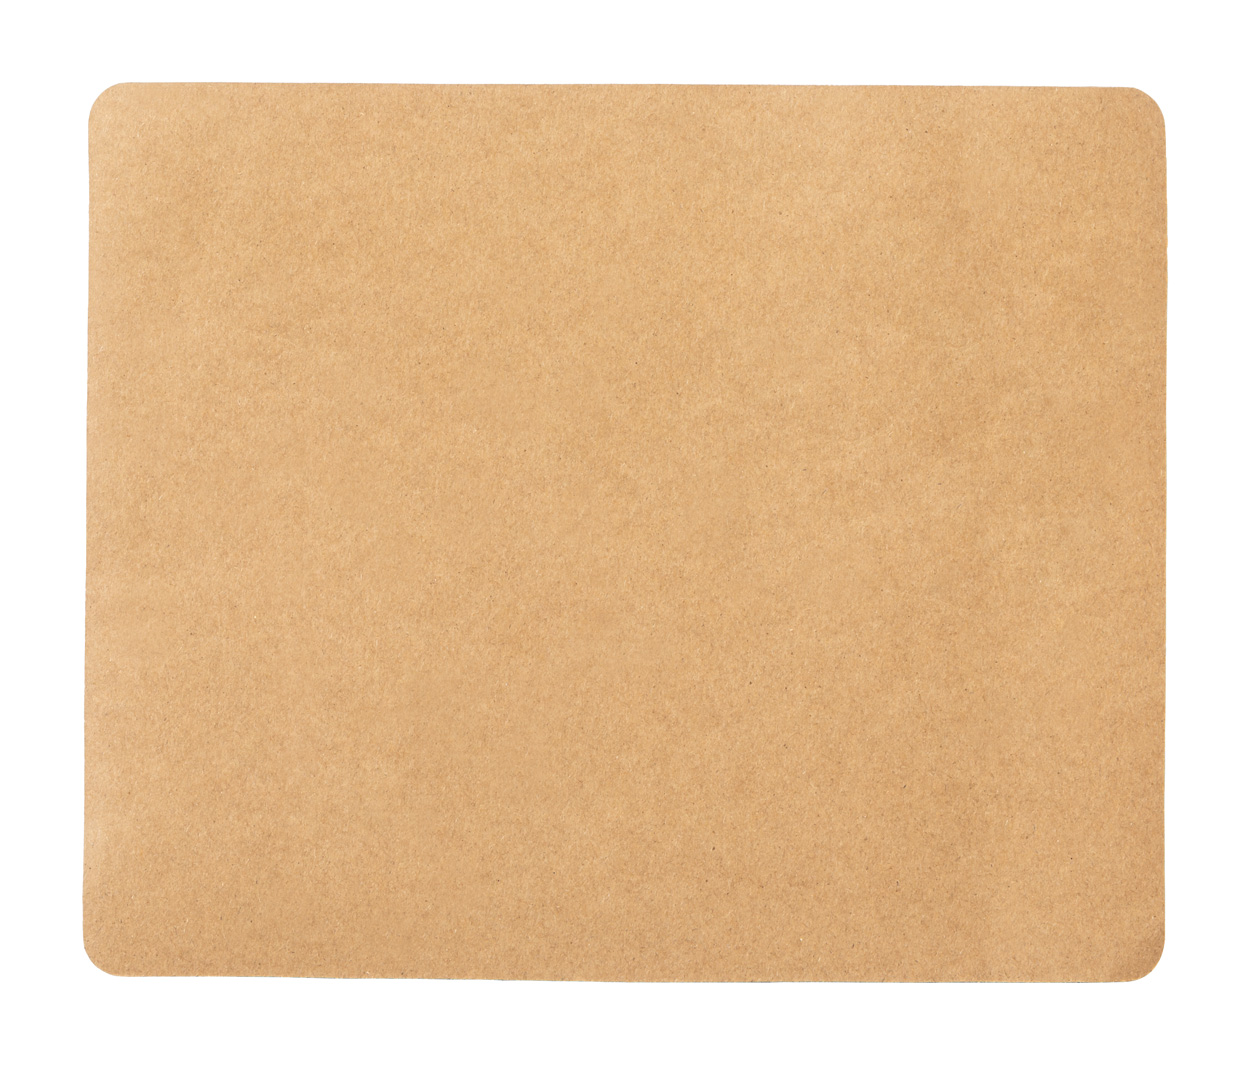 Sinjur paper mouse pad - beige